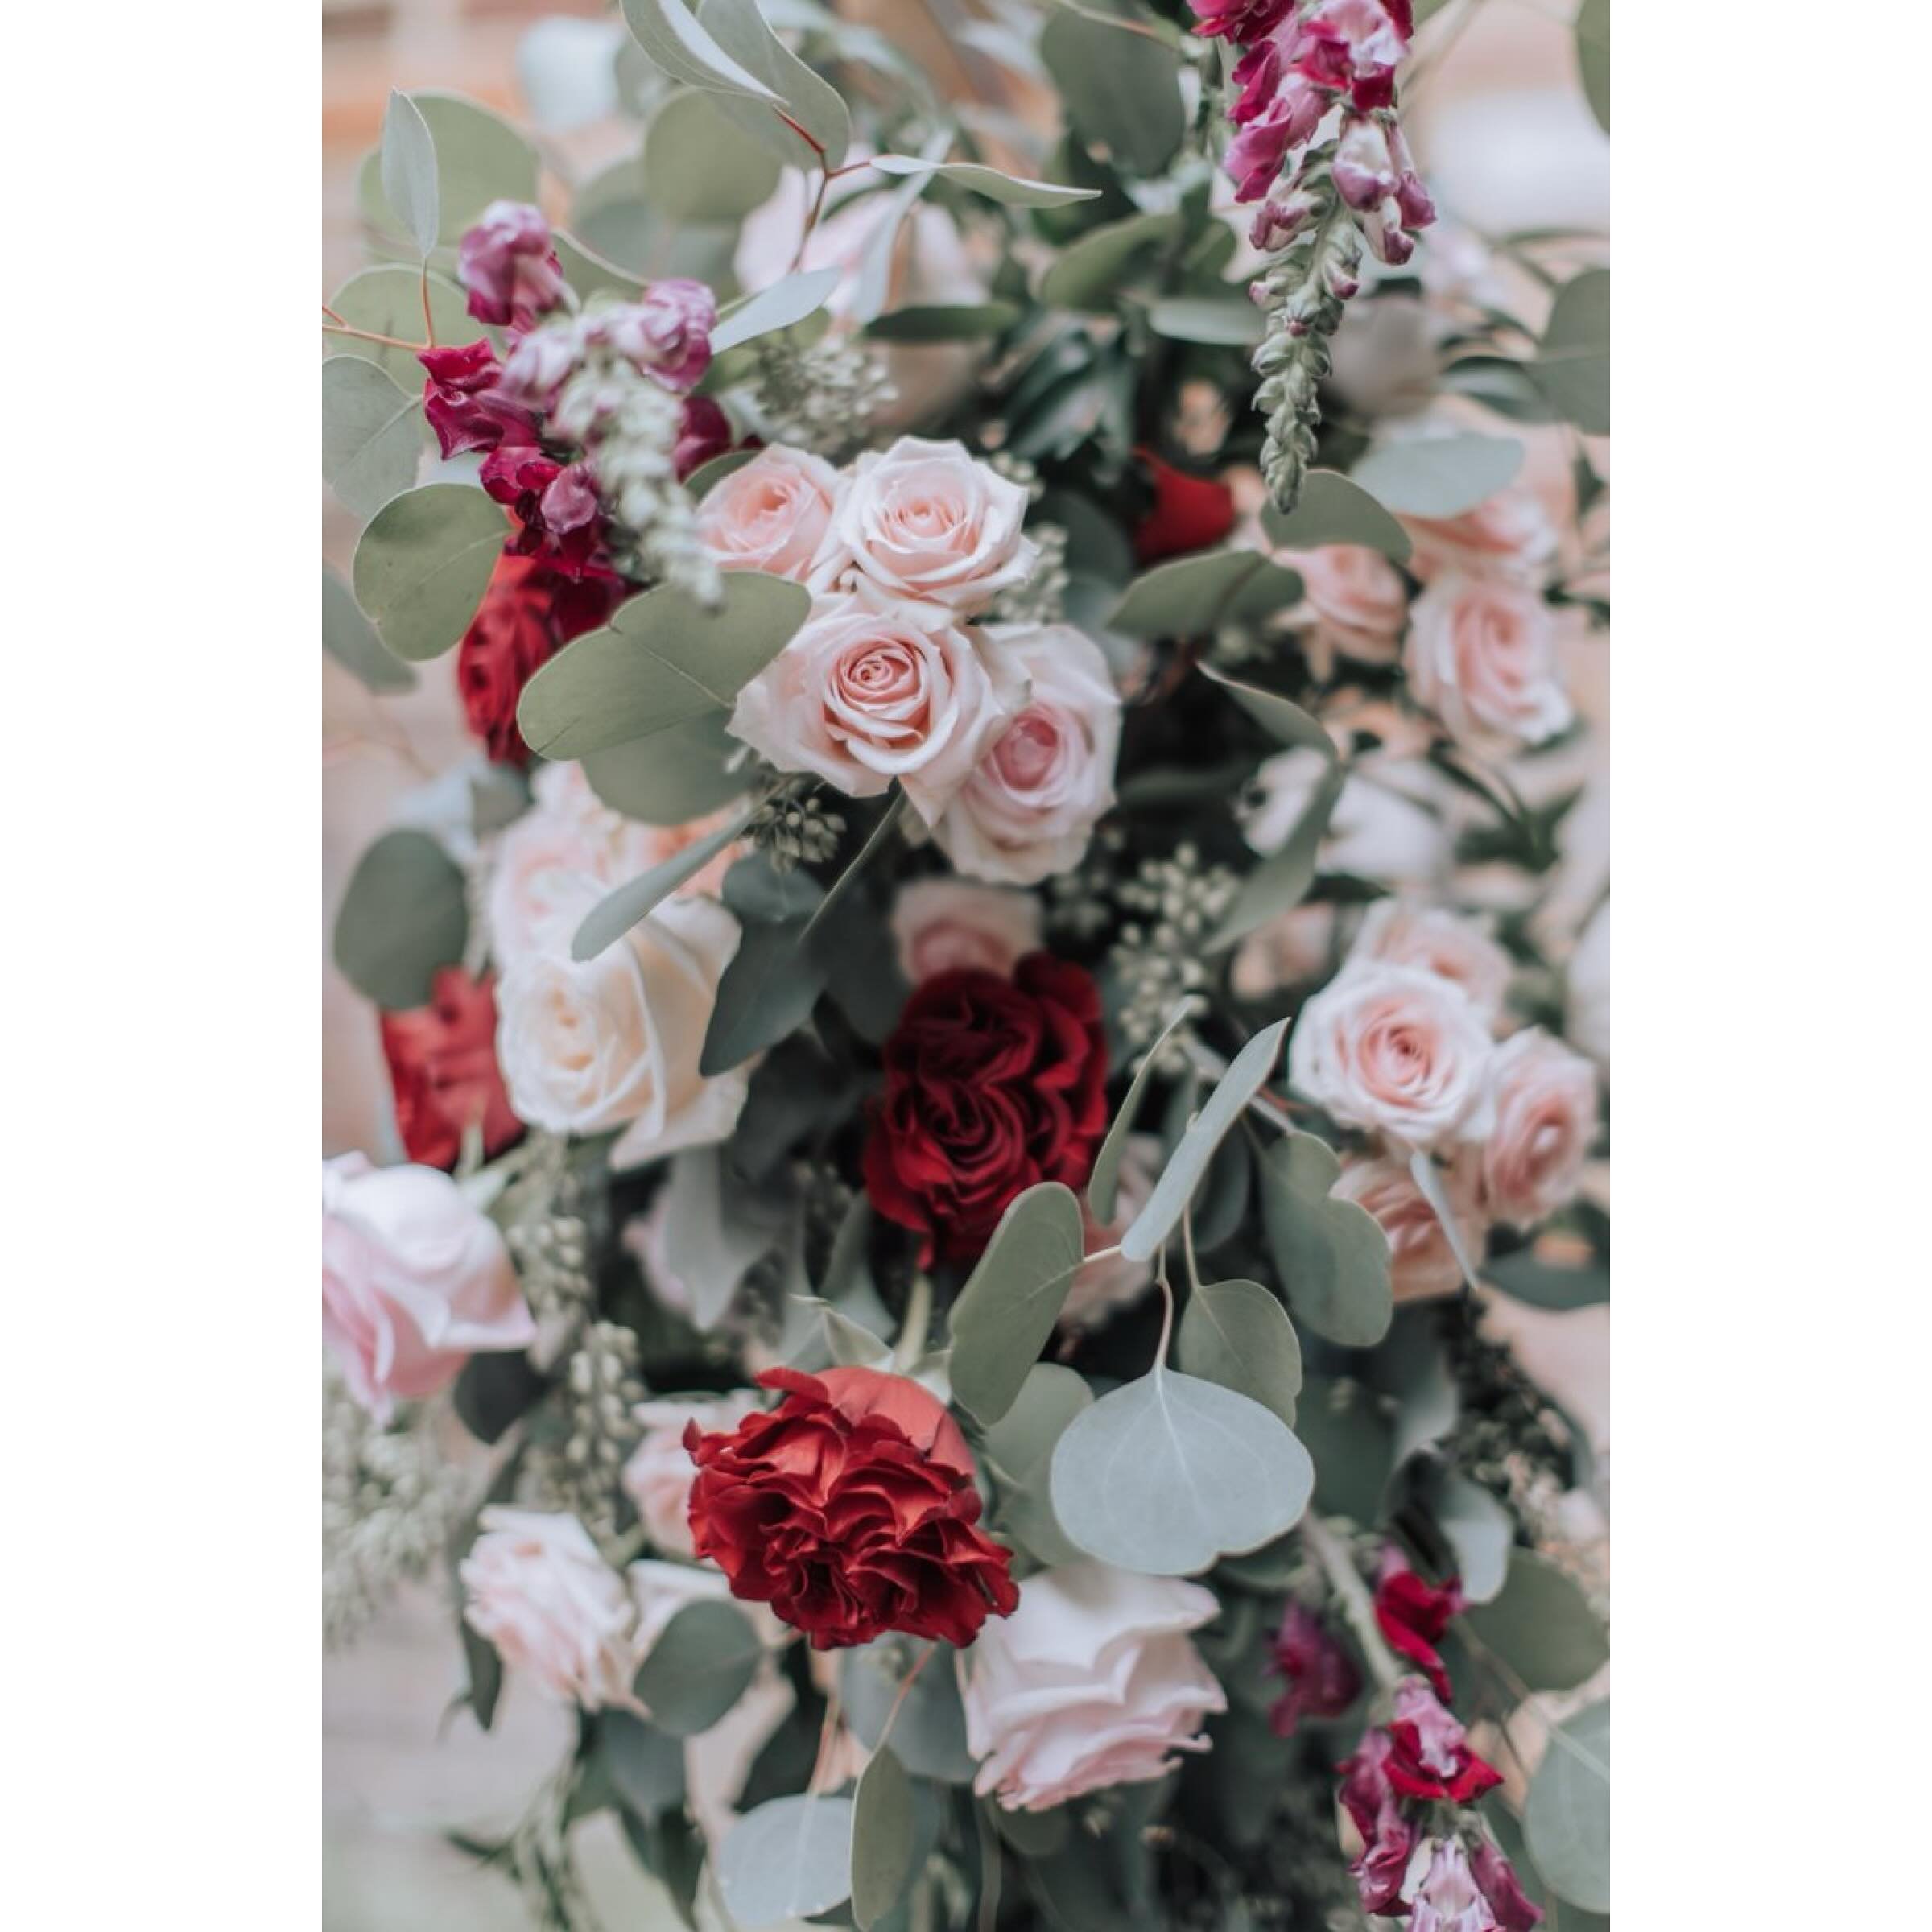 Love In Full Bloom🪷 

#floralfairytale #bridalblooms #weddingflowersinspiration #virginiaweddingphotos #alexandriaweddingphotographer #dcweddingphotography